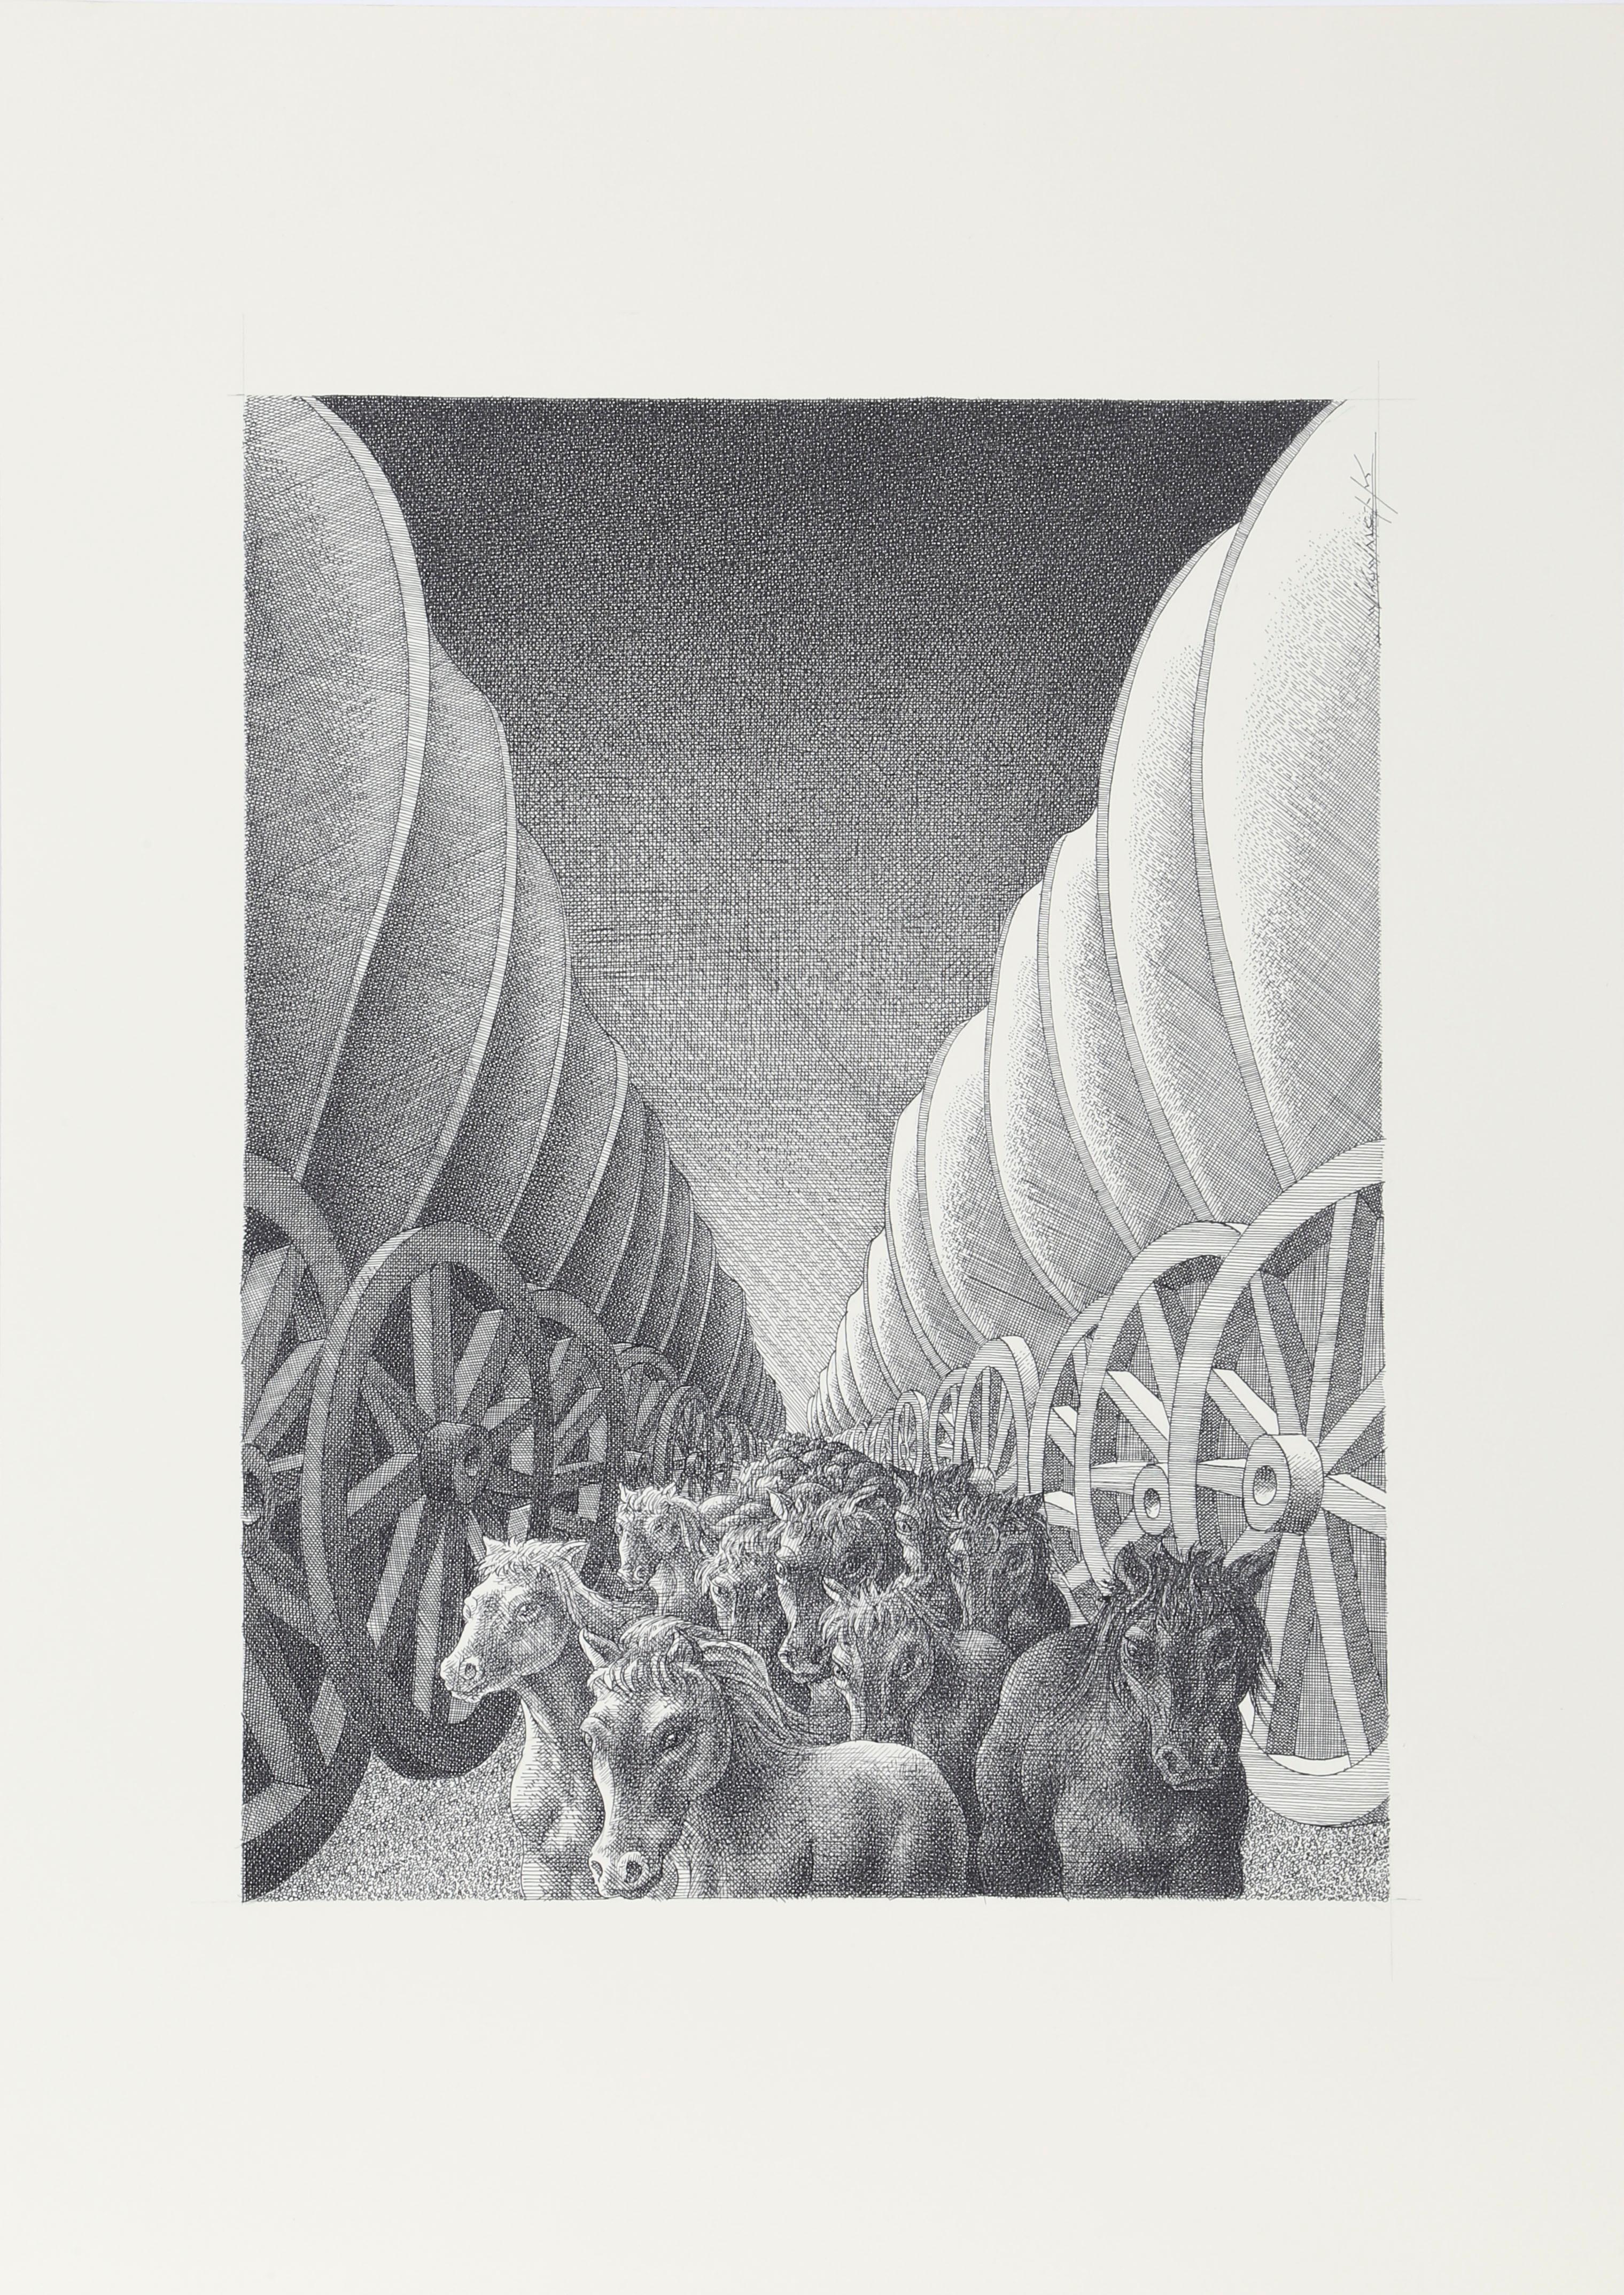 Horses, Surrealist Ink Drawing by Wojtek Kowalczyk